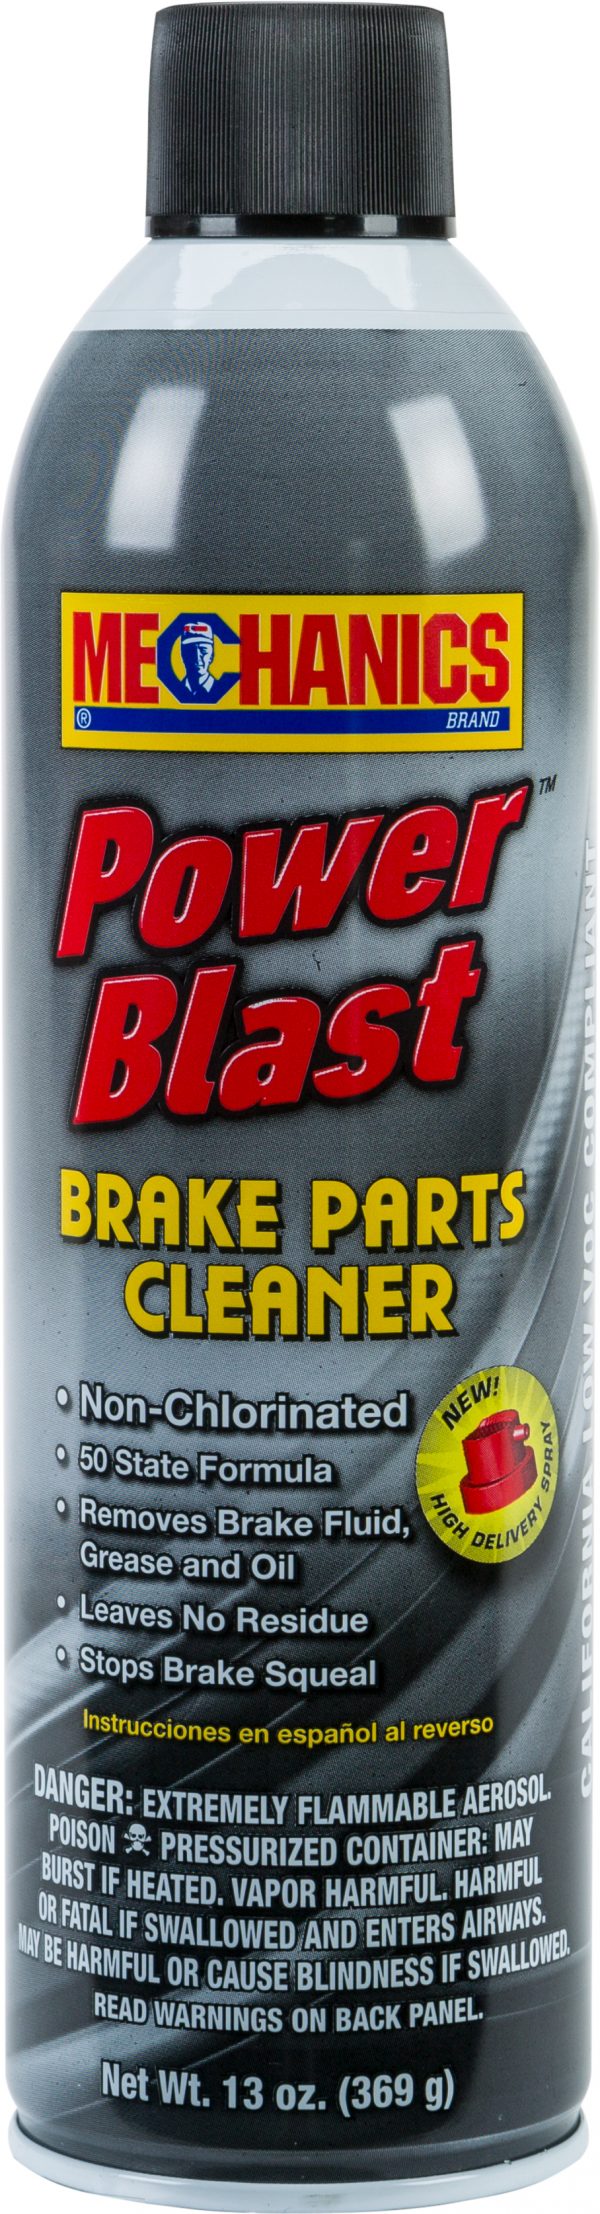 Brake Cleaner Image